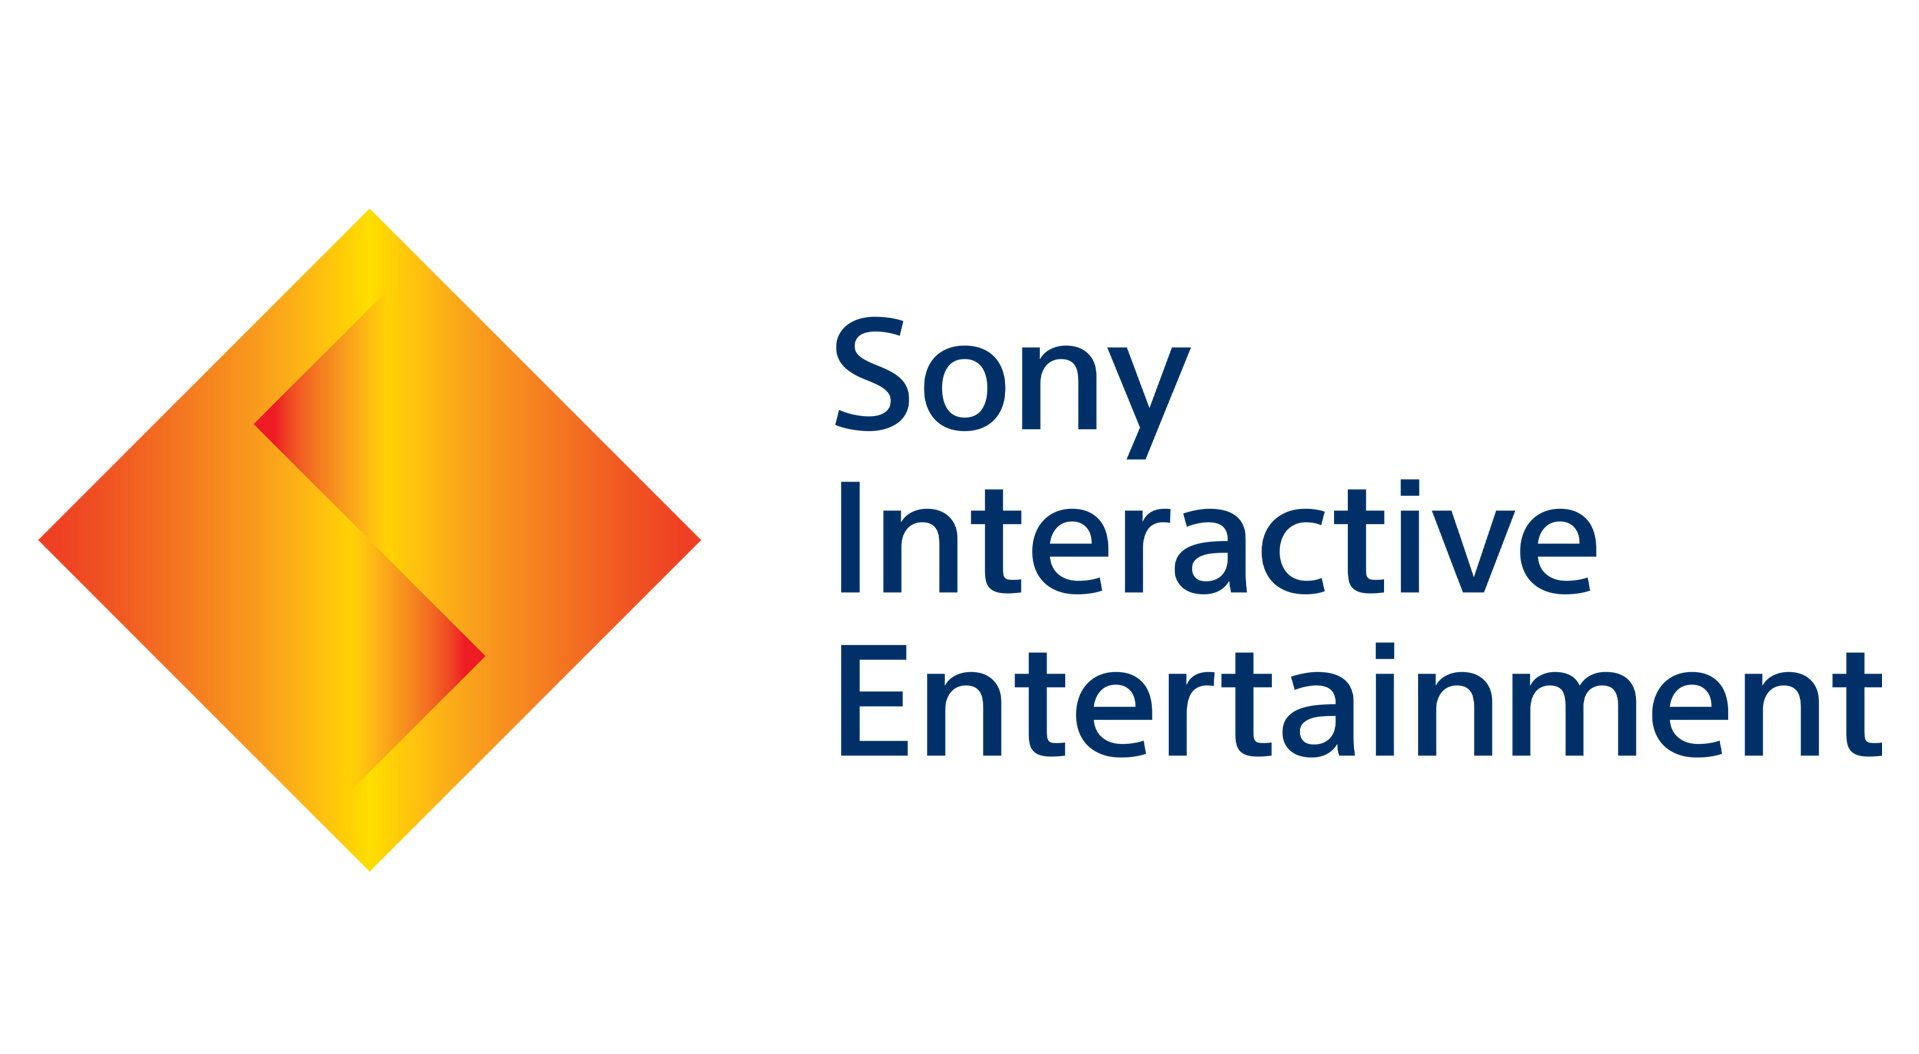 Sony Interactive Entertainment logo on white background